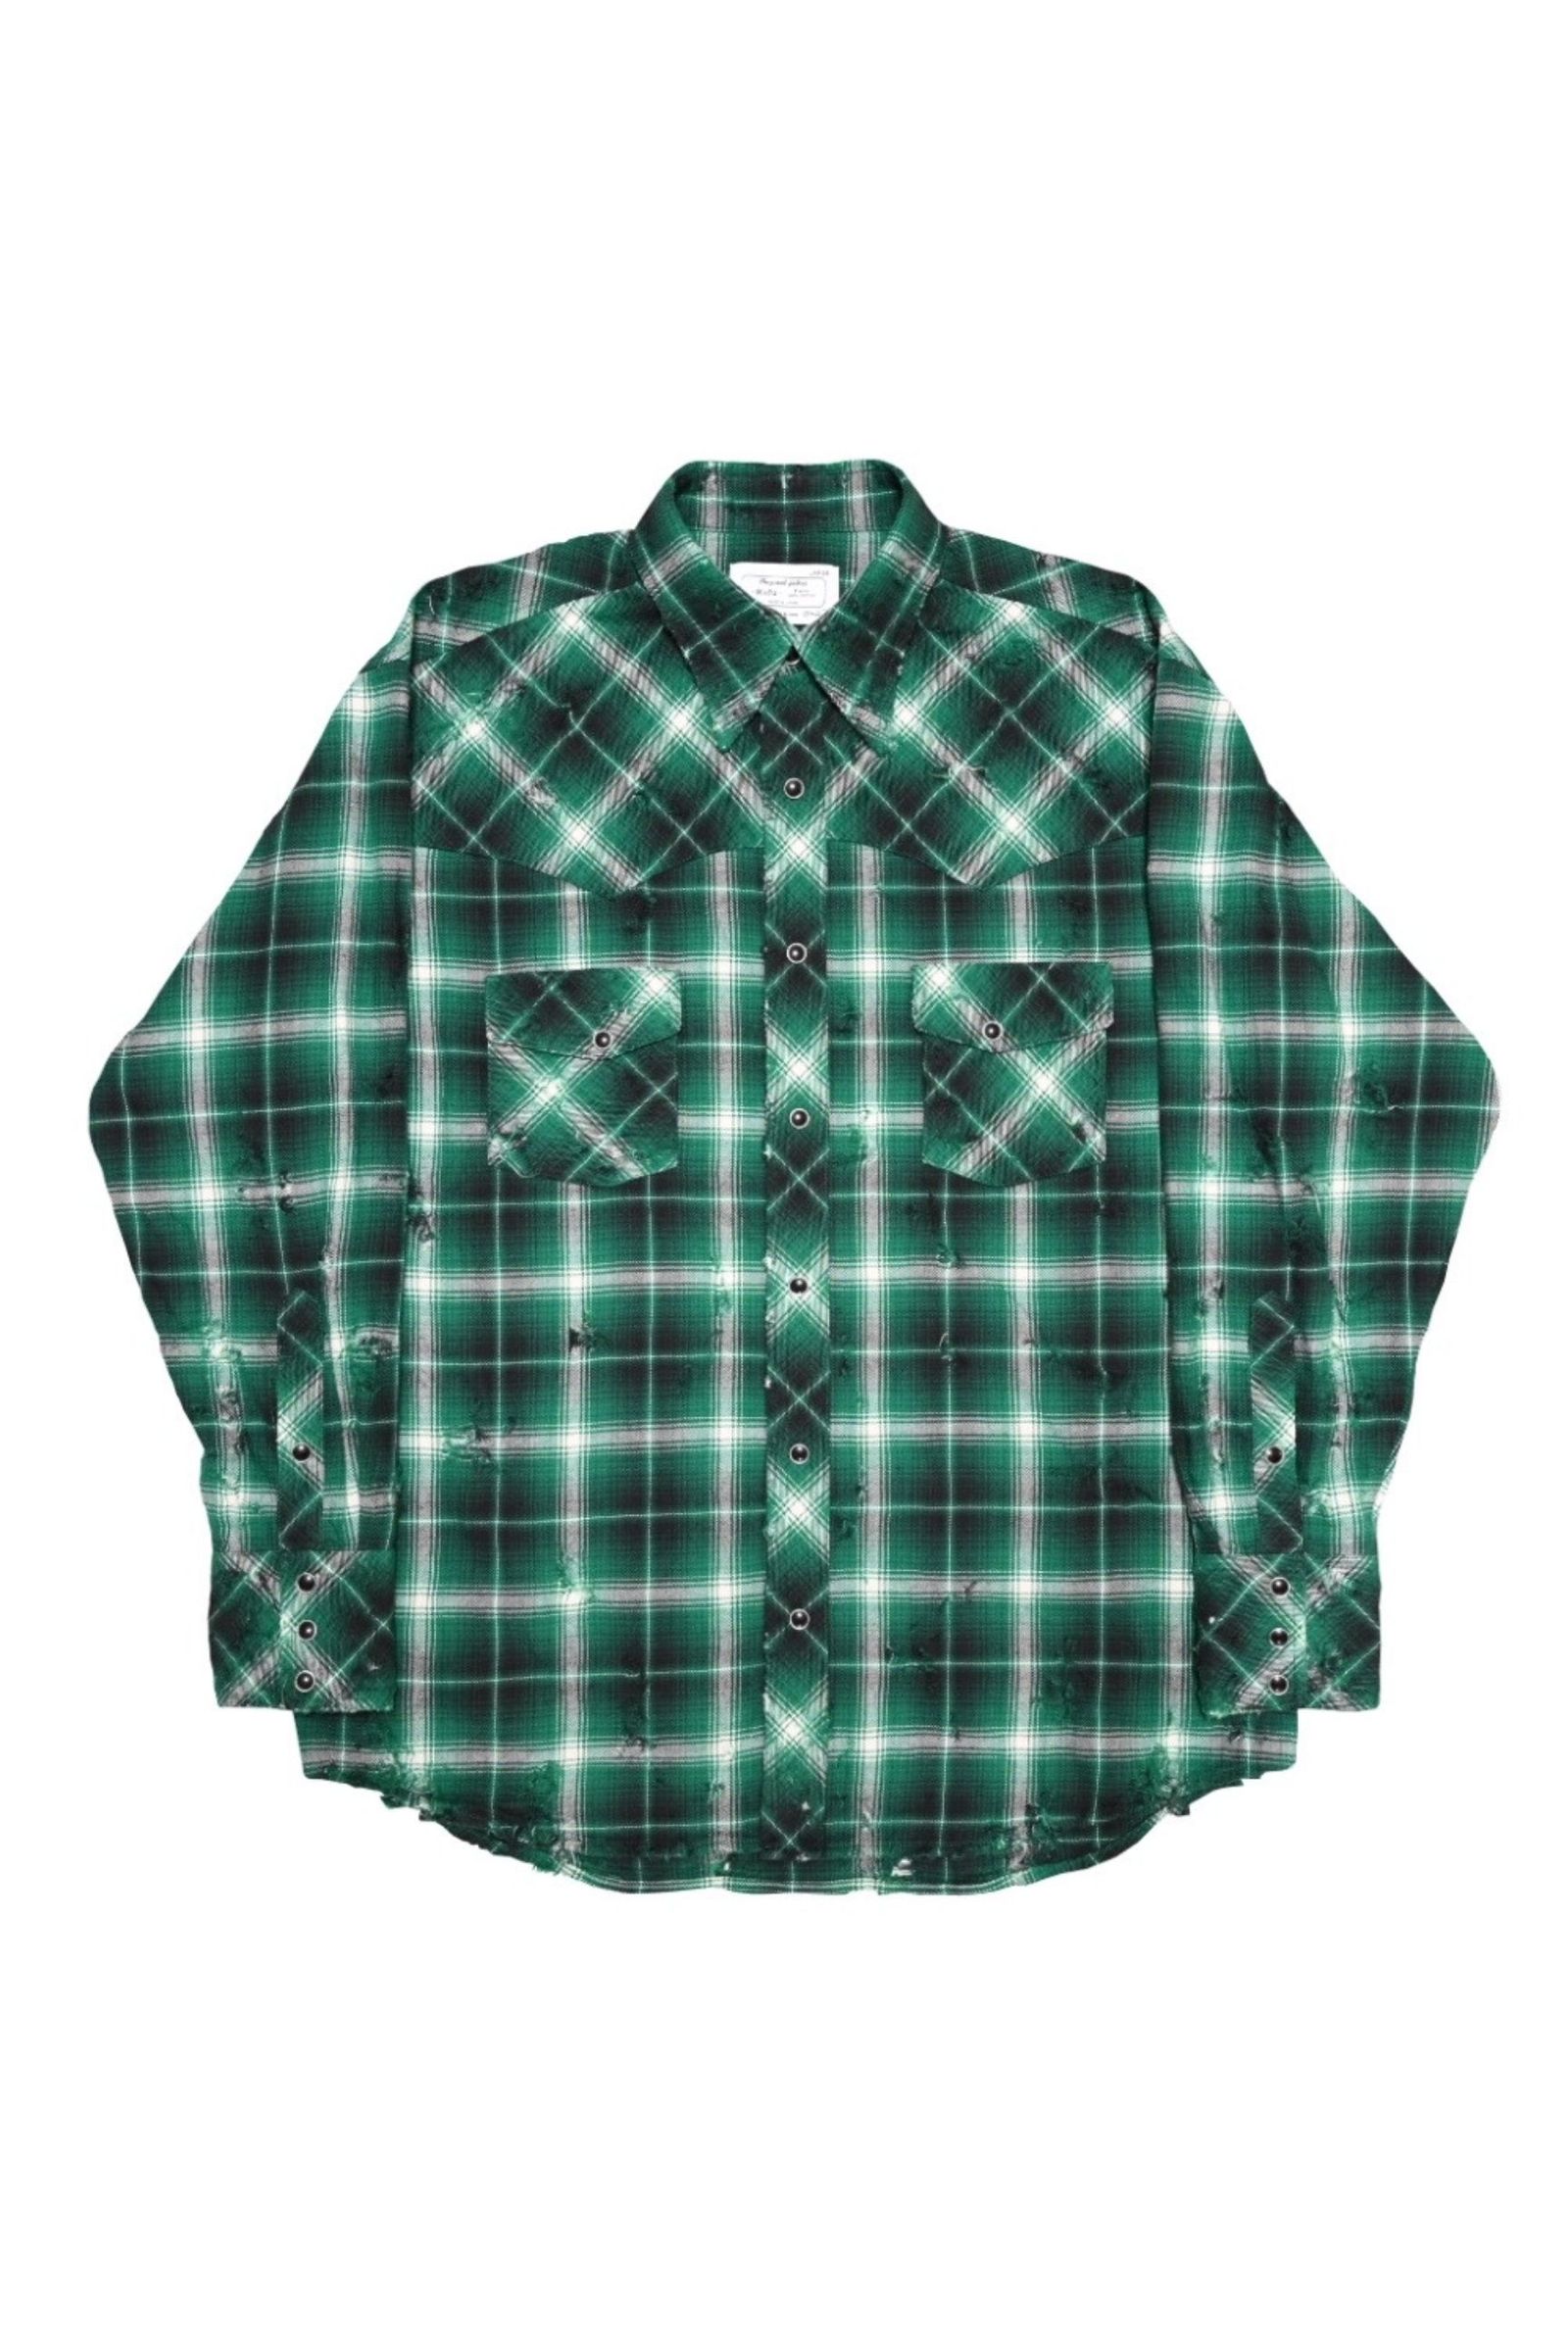 Rafu - Western shirt/GREEN | NapsNote